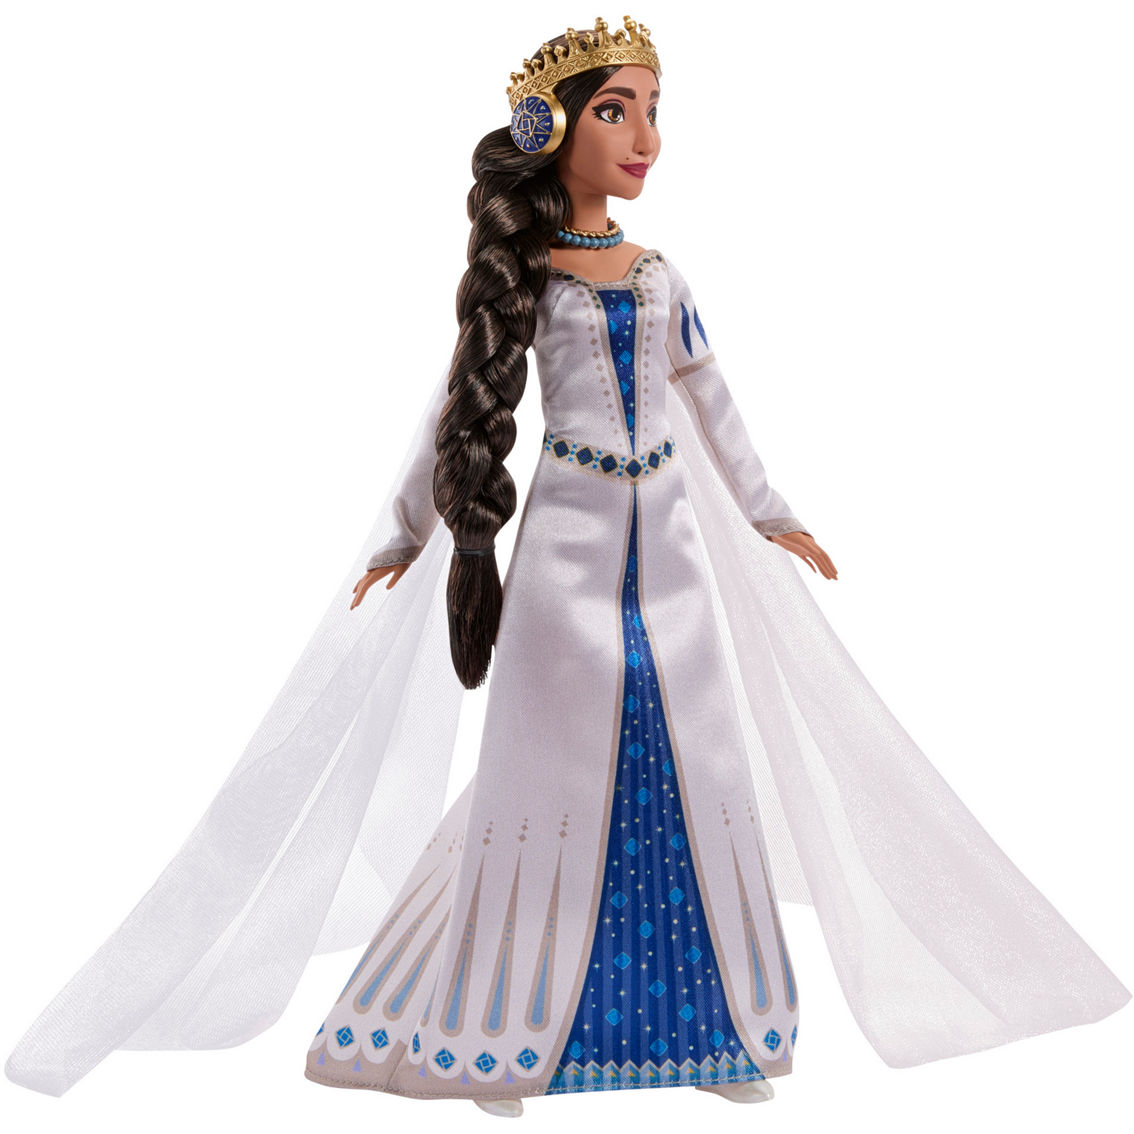 Mattel Disney Wish Queen Amaya of Rosas Fashion Doll - Image 2 of 7